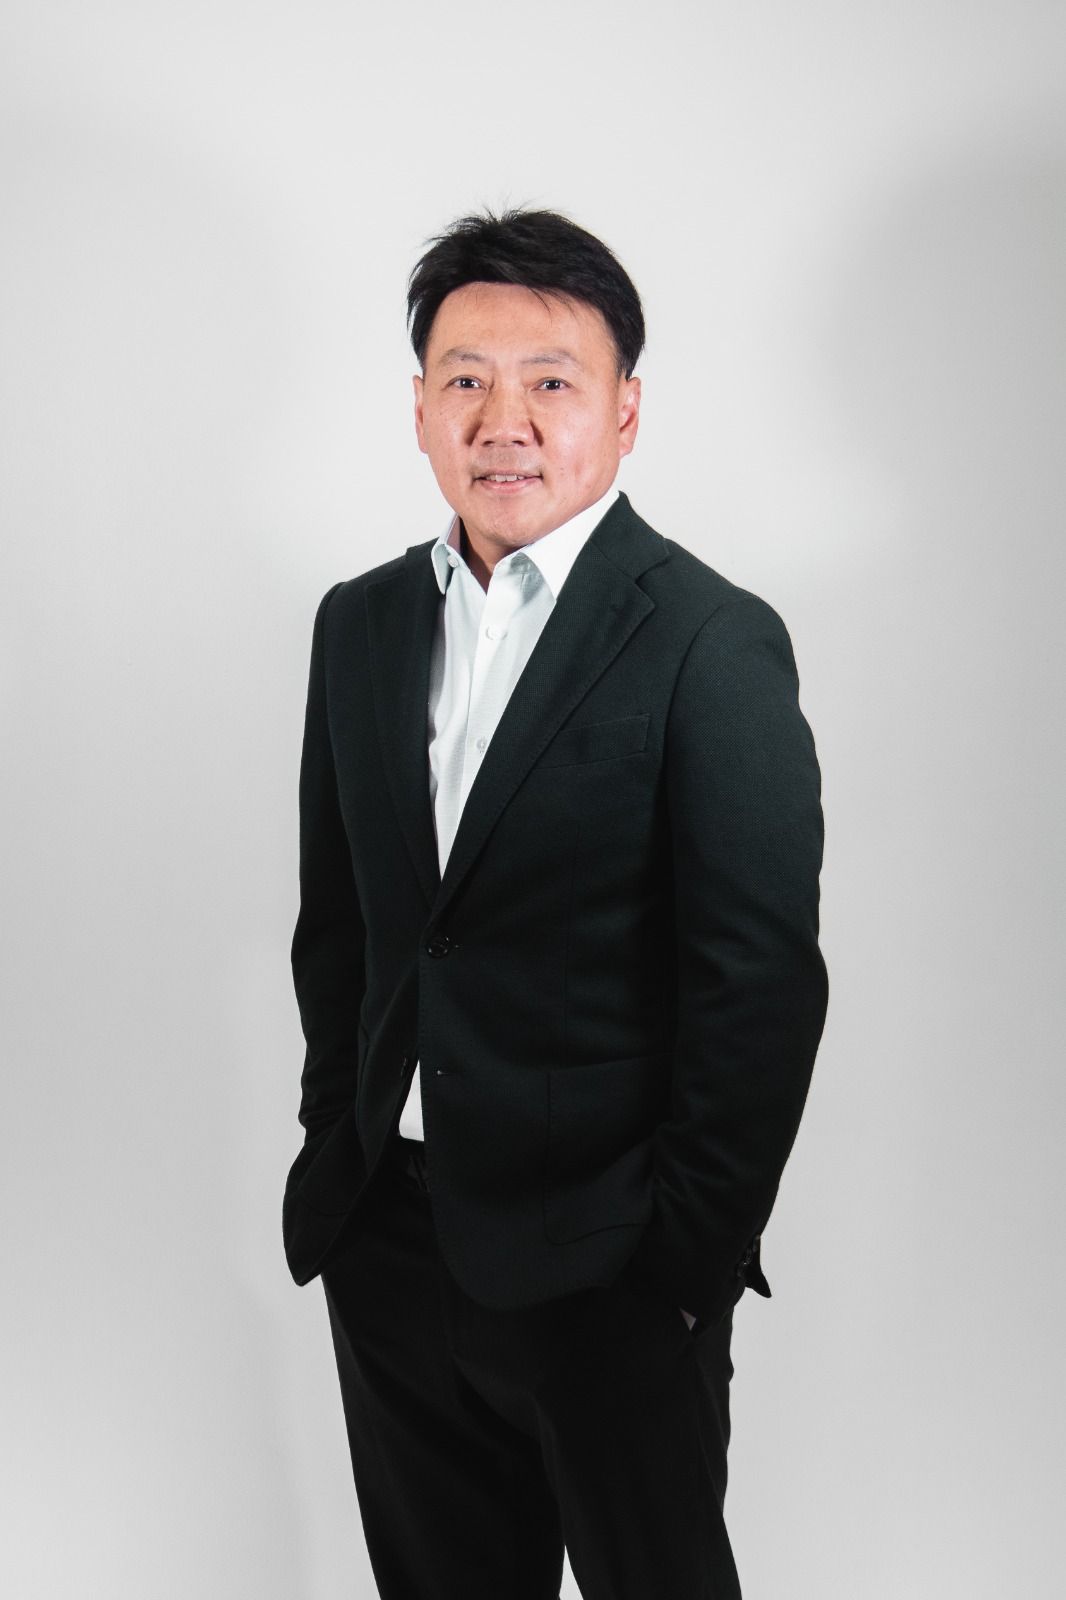 Mr. Kitti Chungsawanant, Director of KJTN Engineering